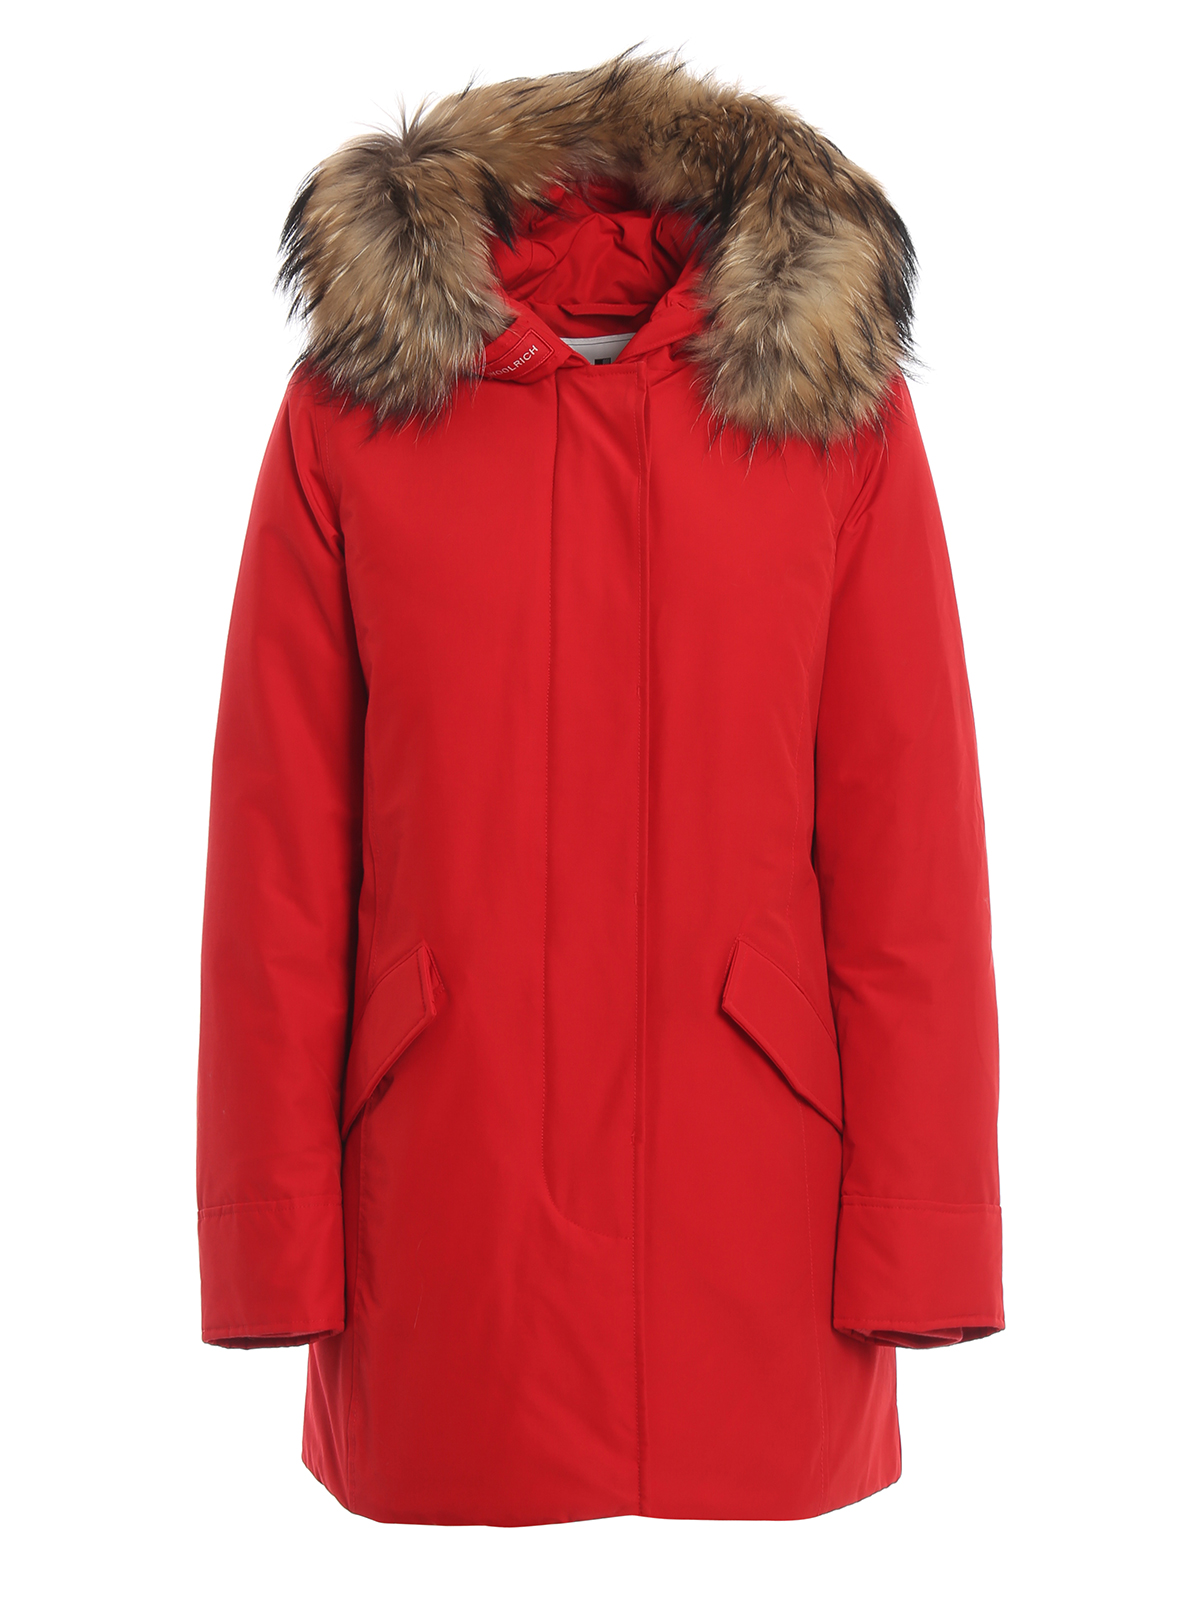 Woolrich Women's Jacket - Red - Casual Jackets